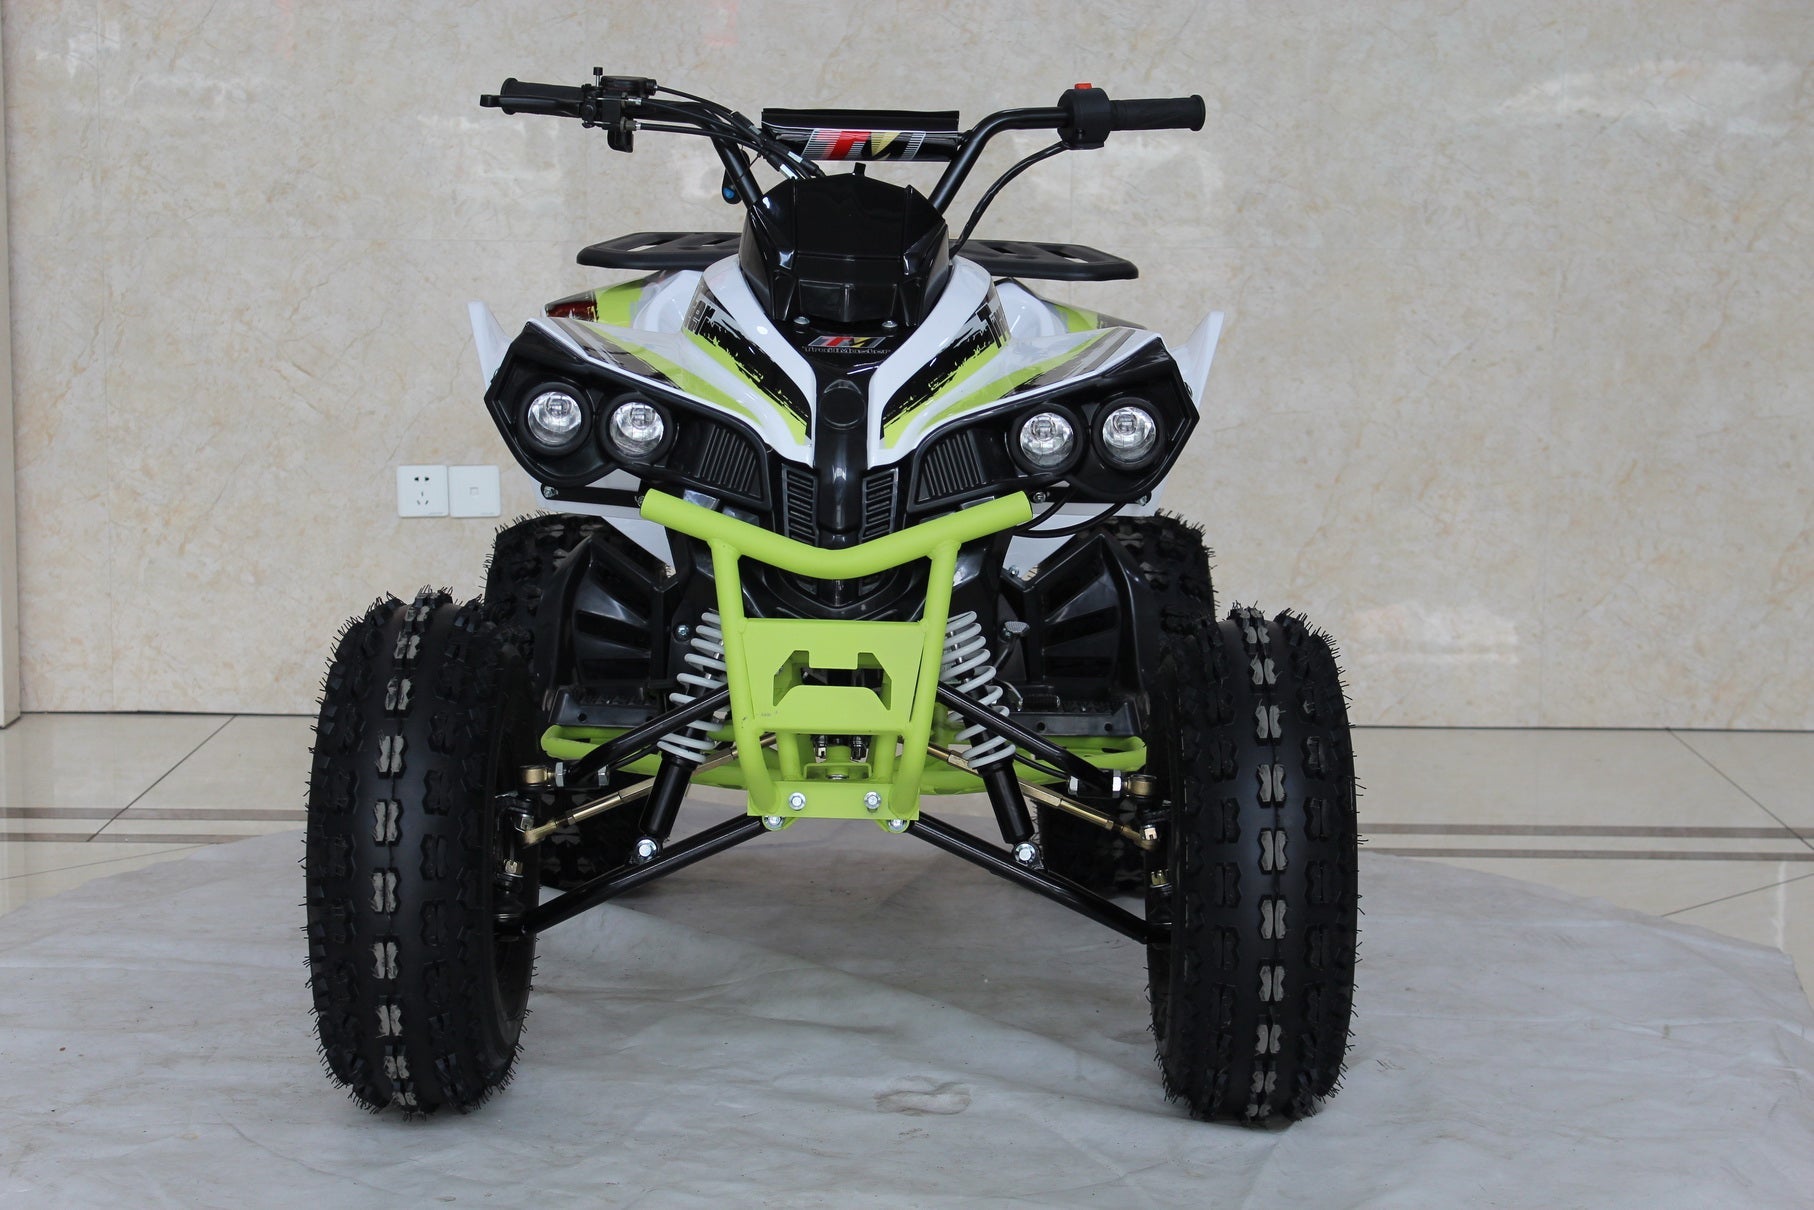 Trailmaster C125 -125cc Youth Quad - ATV for Kids | MotoBuys